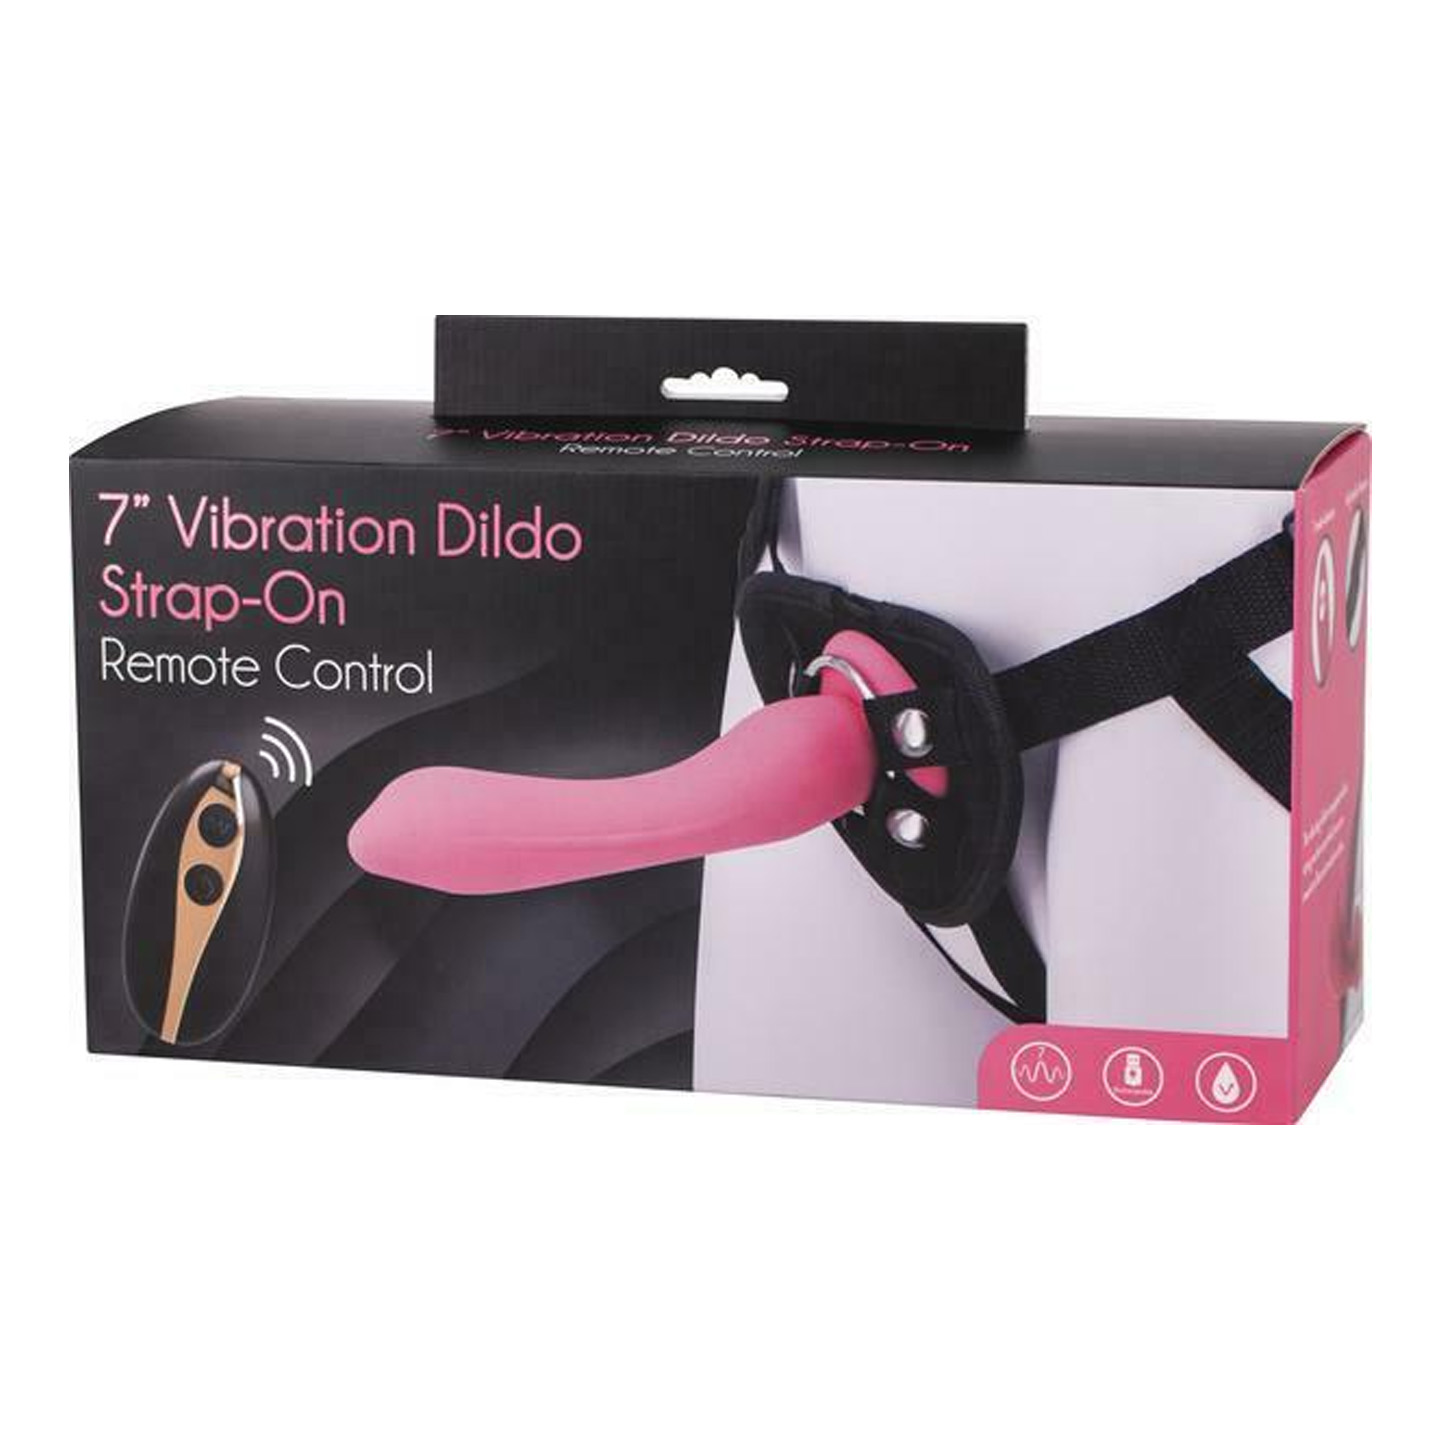 7 inch Vibration Dildo Remote Control Stap-On